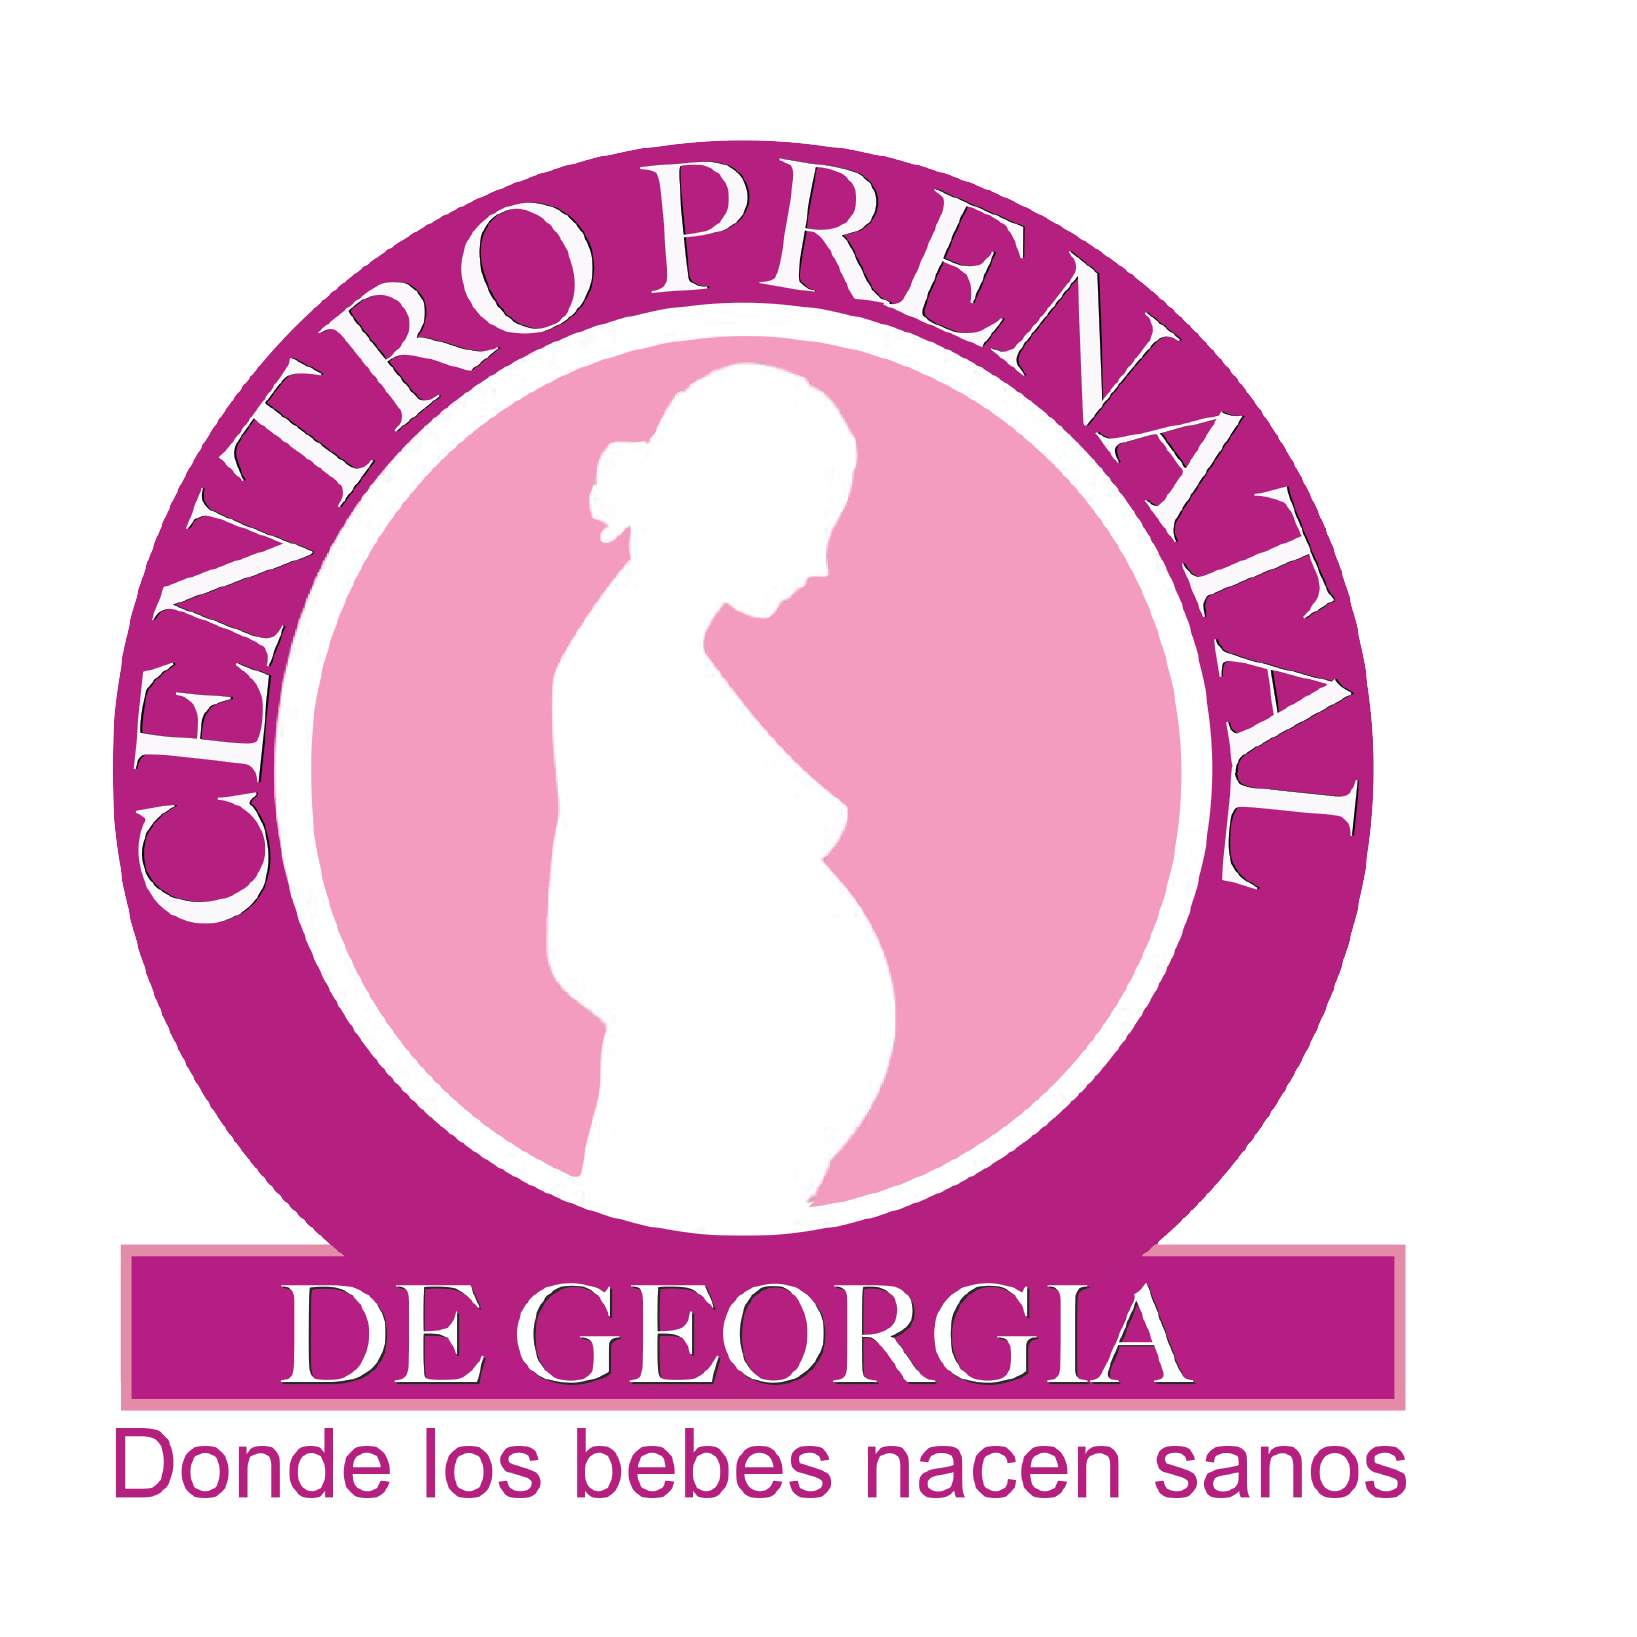 Centro Prenatal de Georgia